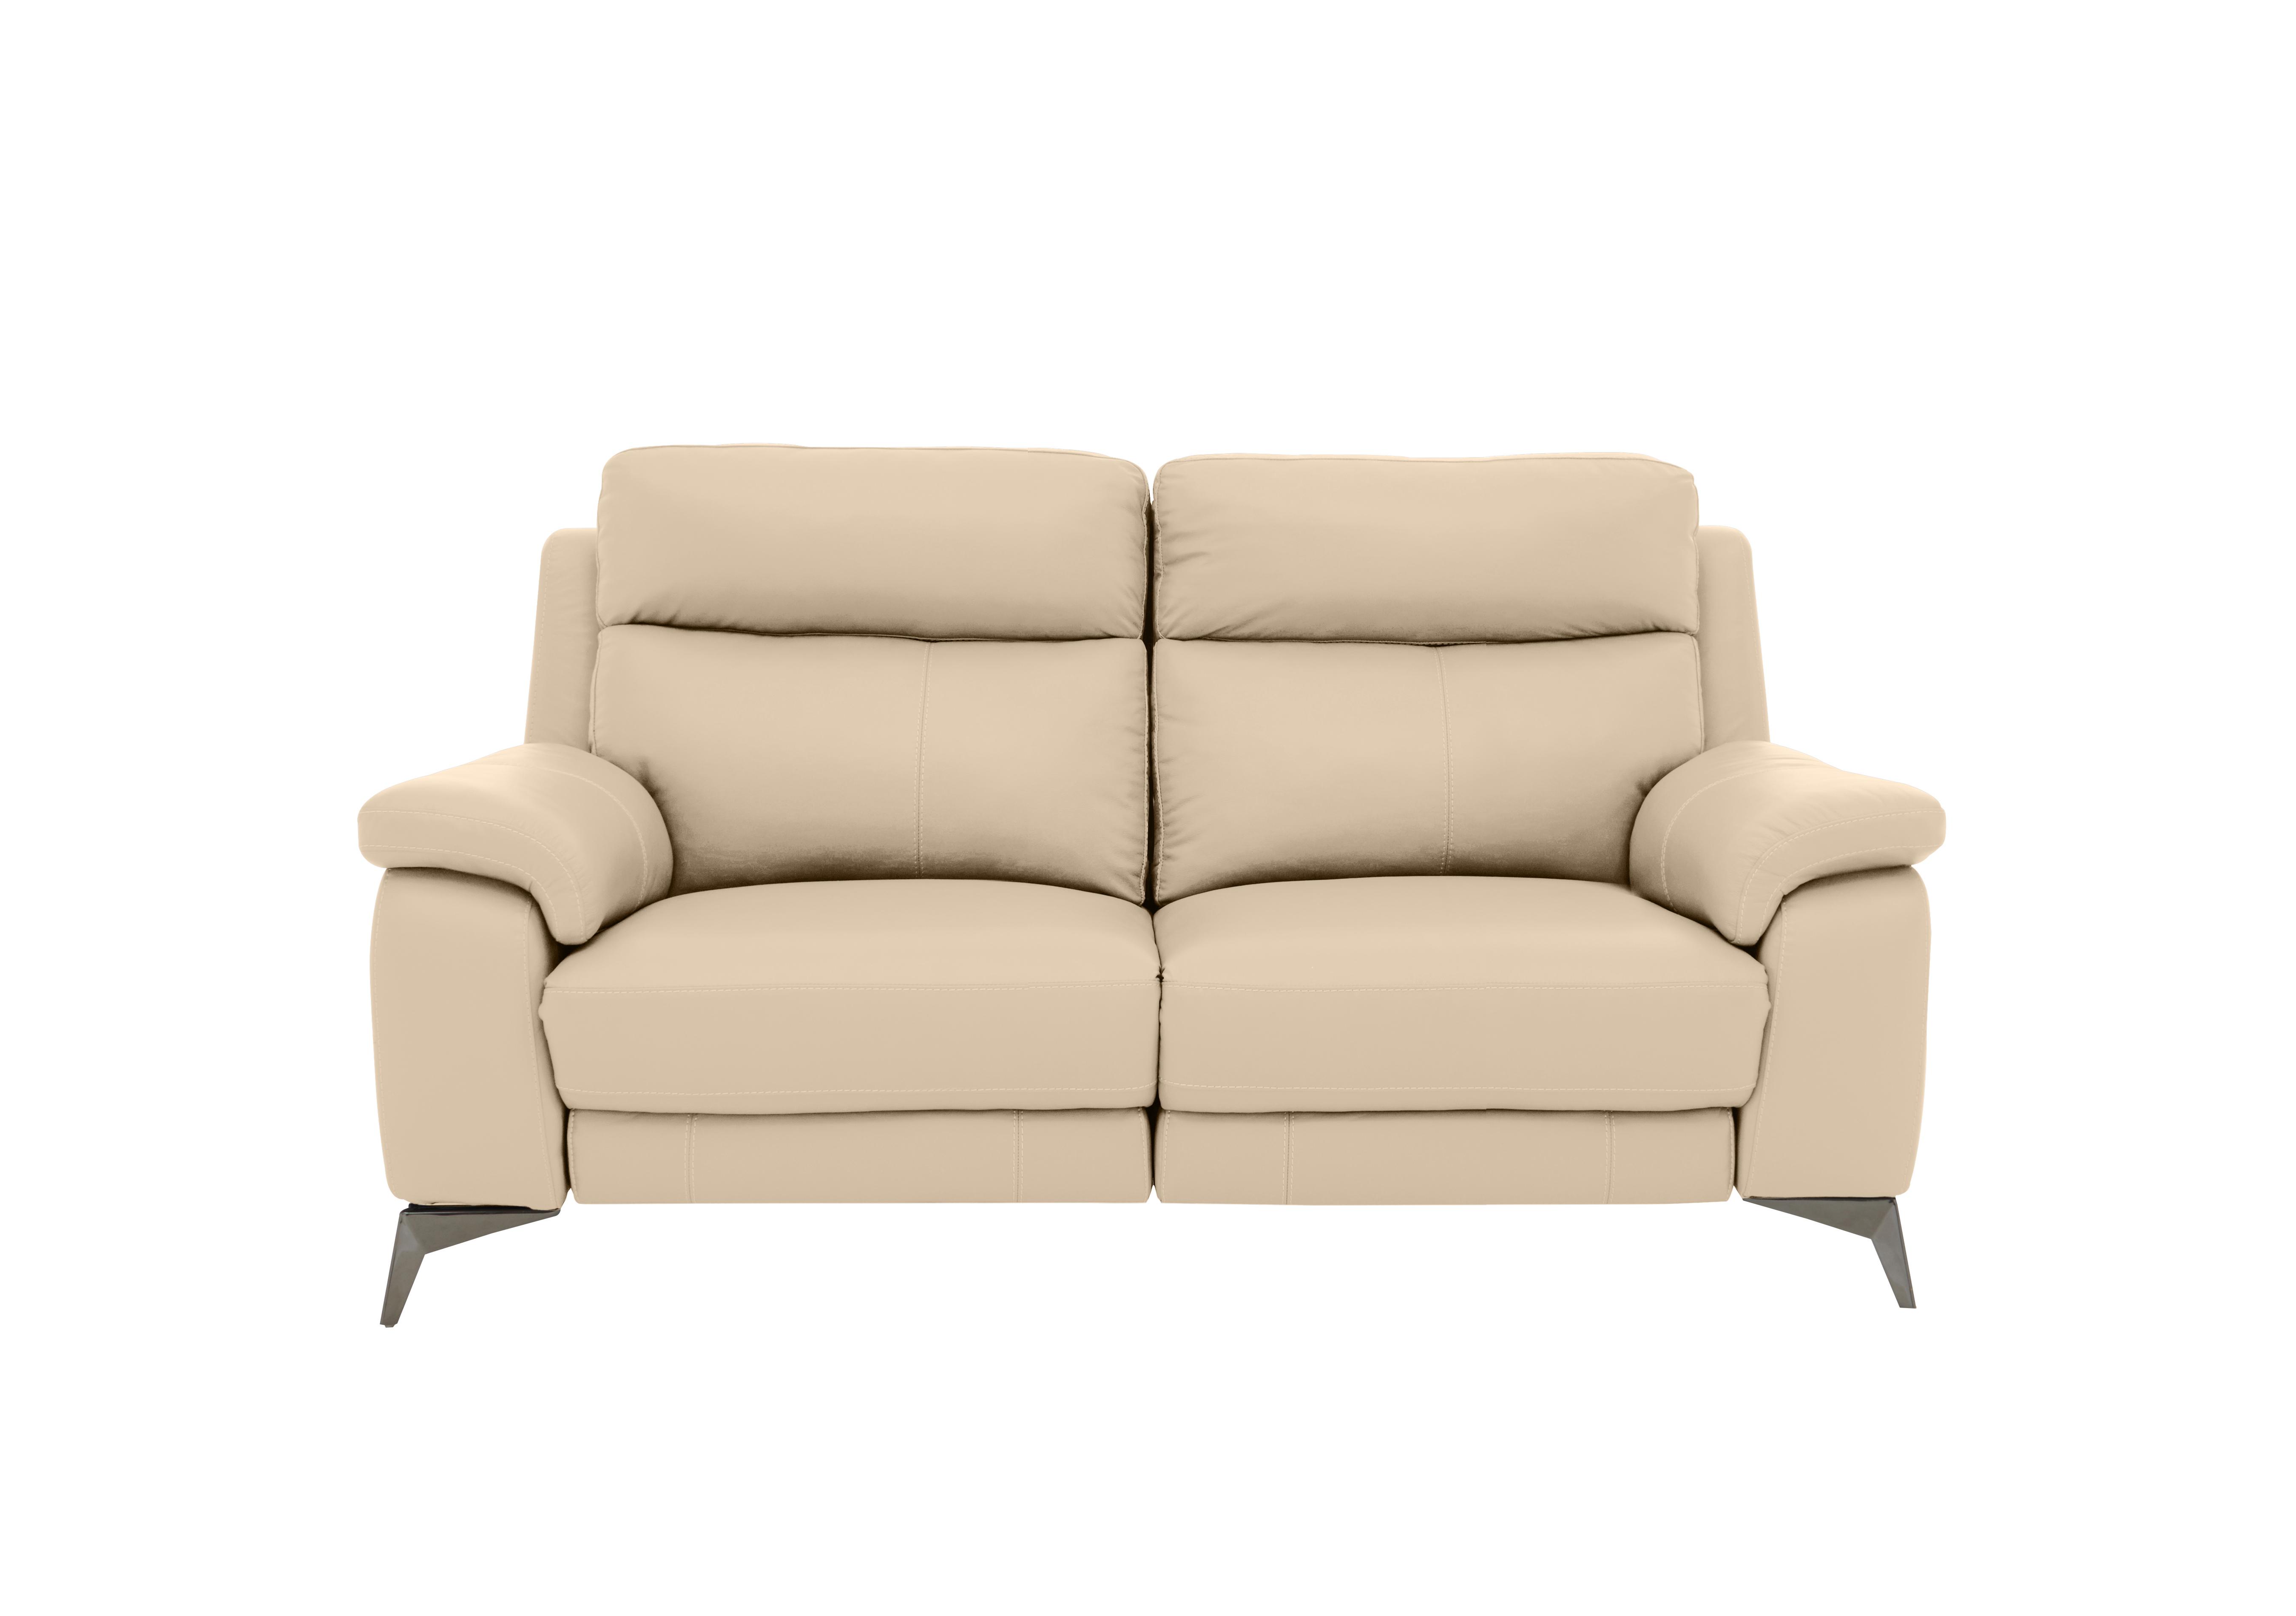 Missouri 2 Seater Leather Recliner Sofa with Power Headrest in Bv-862c Bisque on Furniture Village